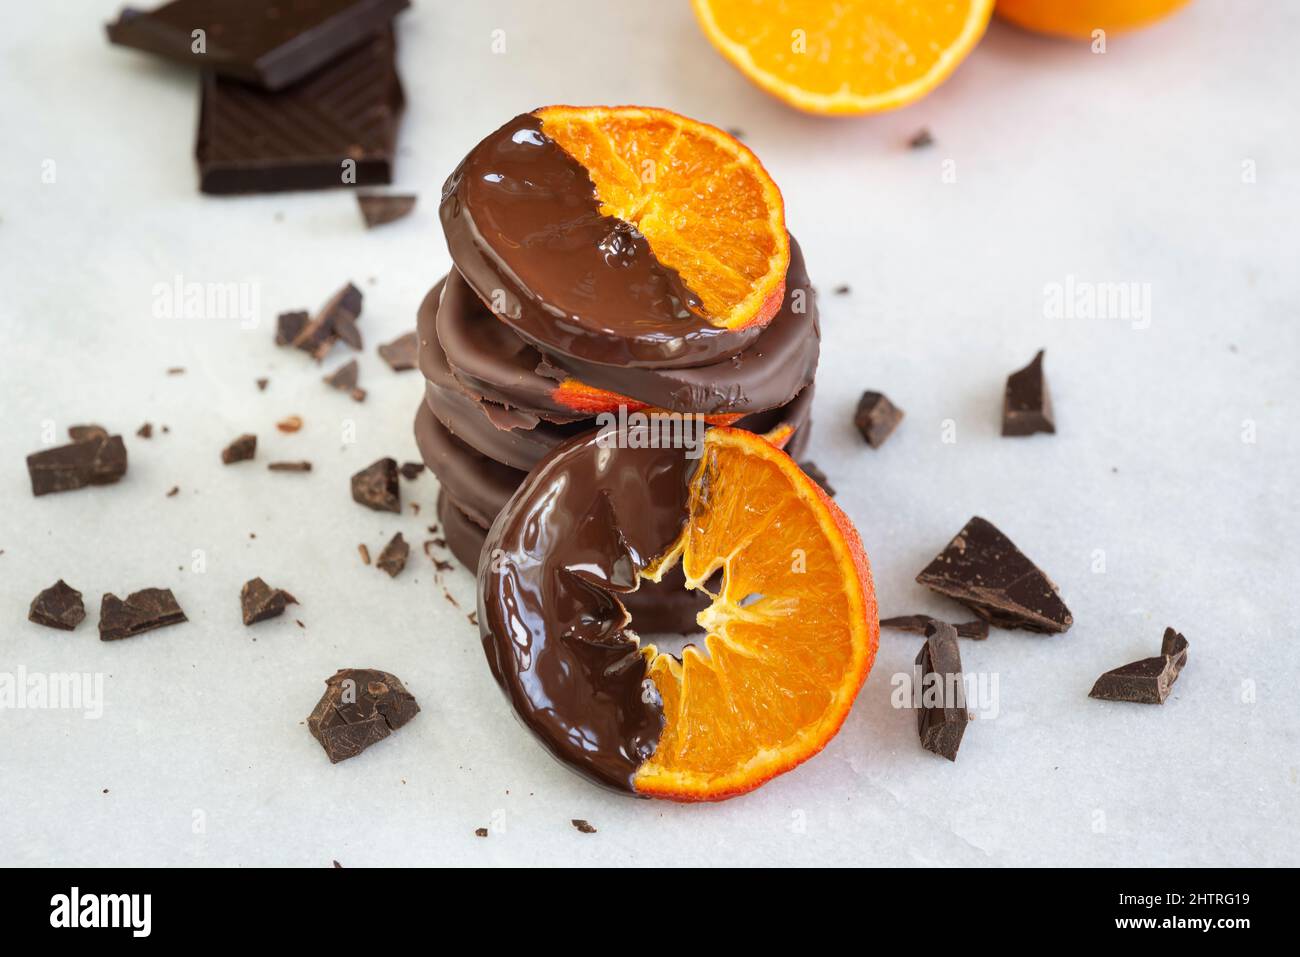 Rodajas de naranja confitada bañadas en chocolate. Foto de stock